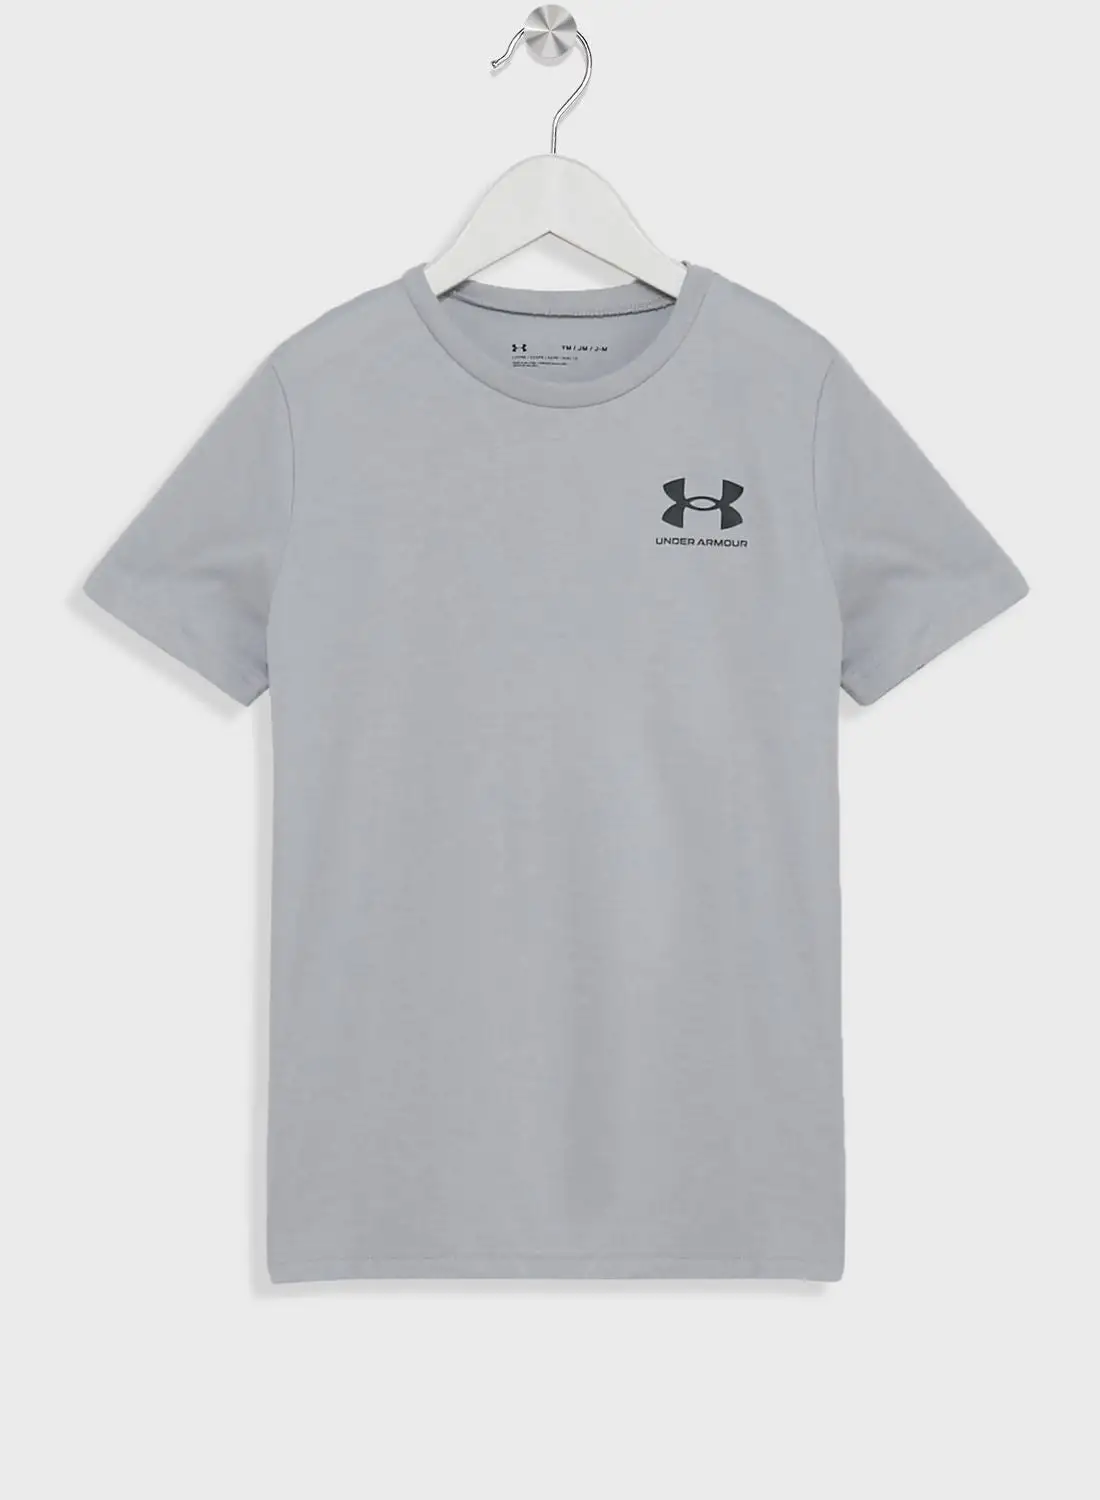 UNDER ARMOUR Boys' Sportstyle Left Chest Logo Short Sleeve T-shirt